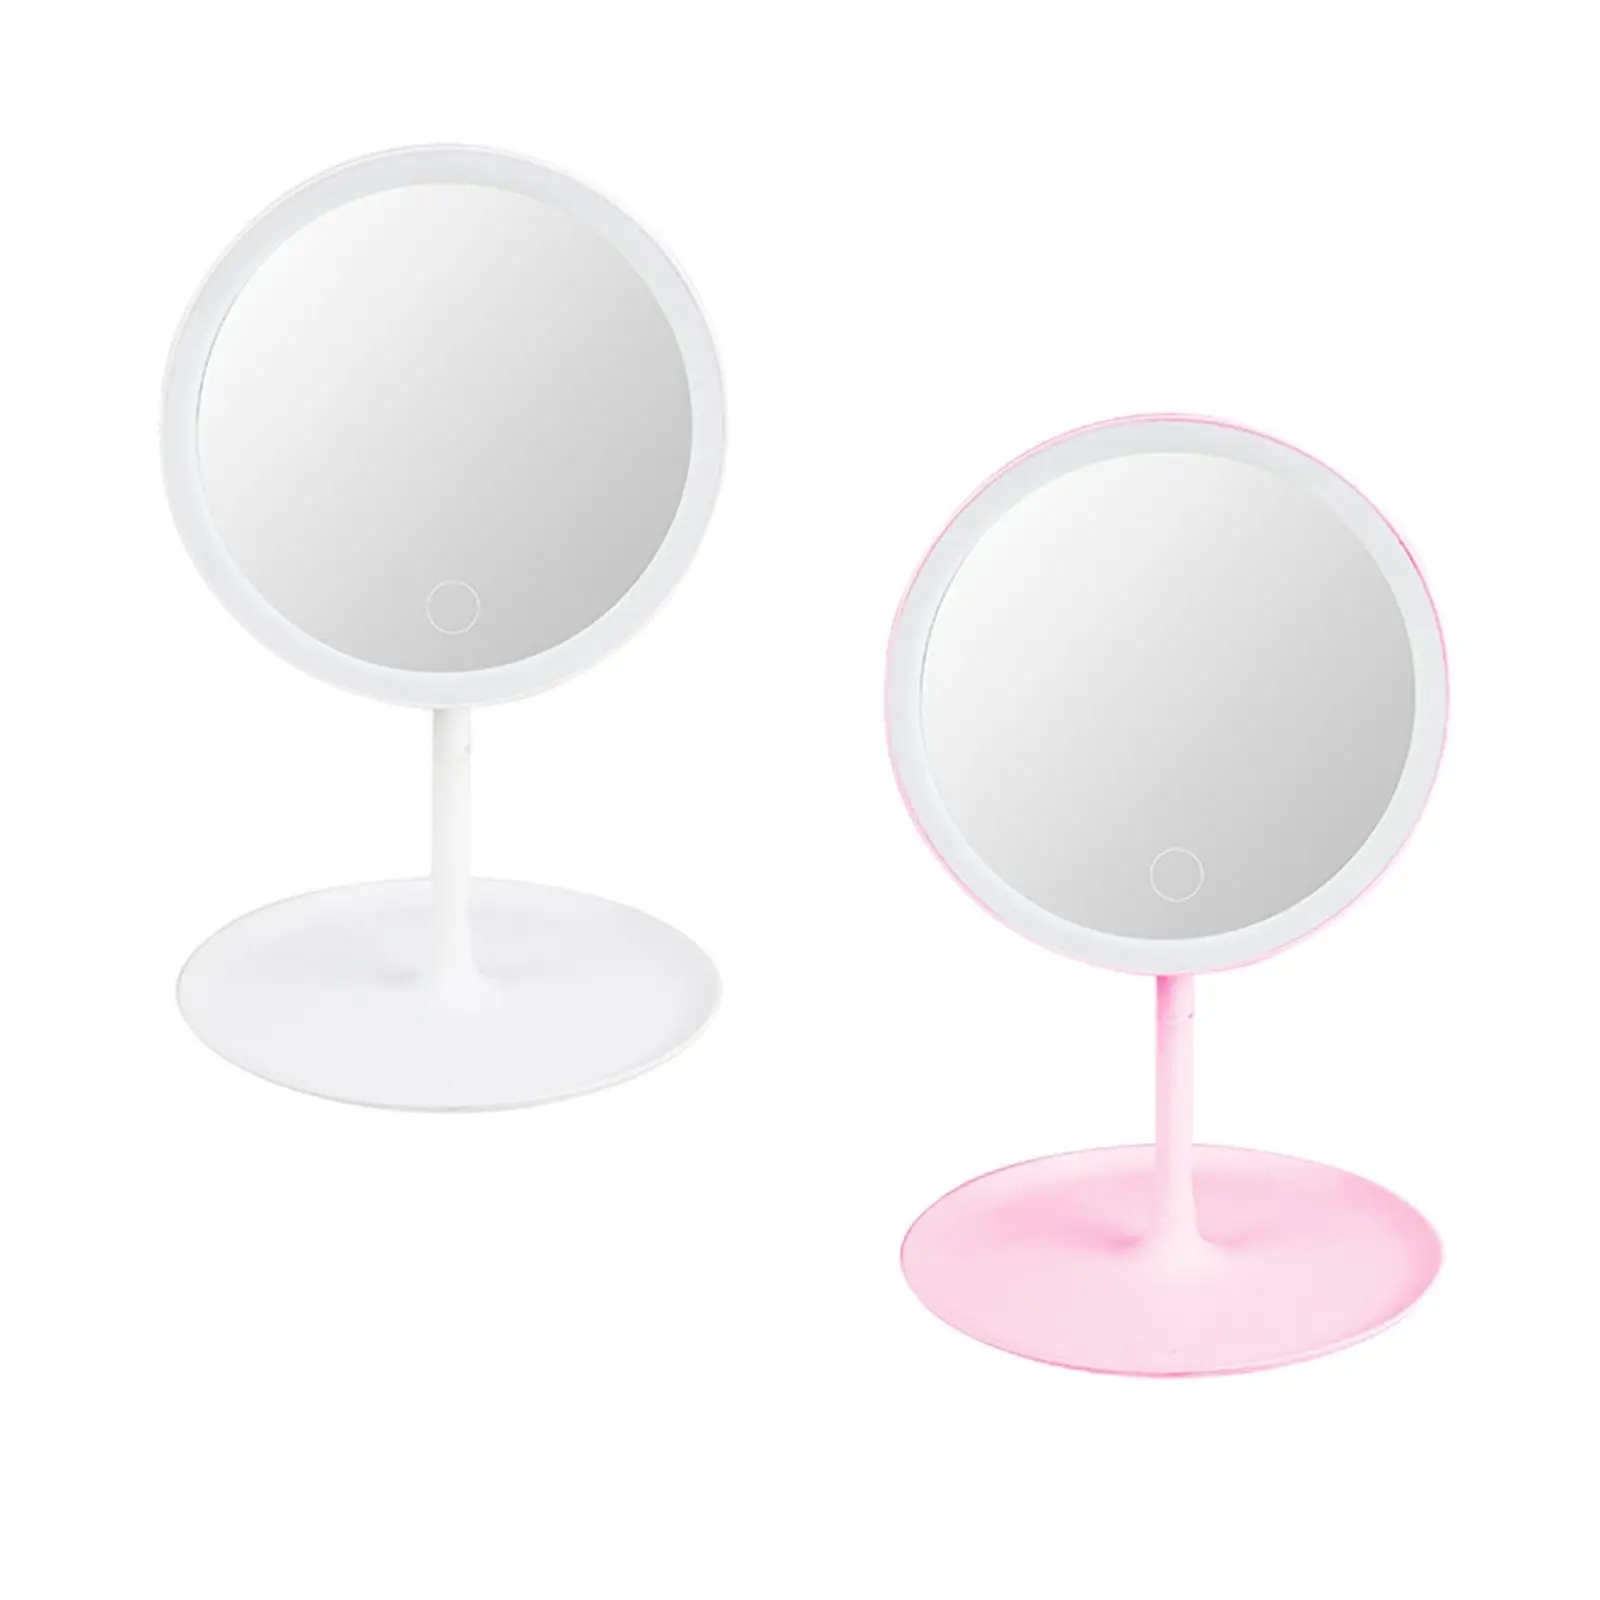 Portable LED Makeup Mirror Travel Cosmetic Mirror for Shaving Vanity Desk